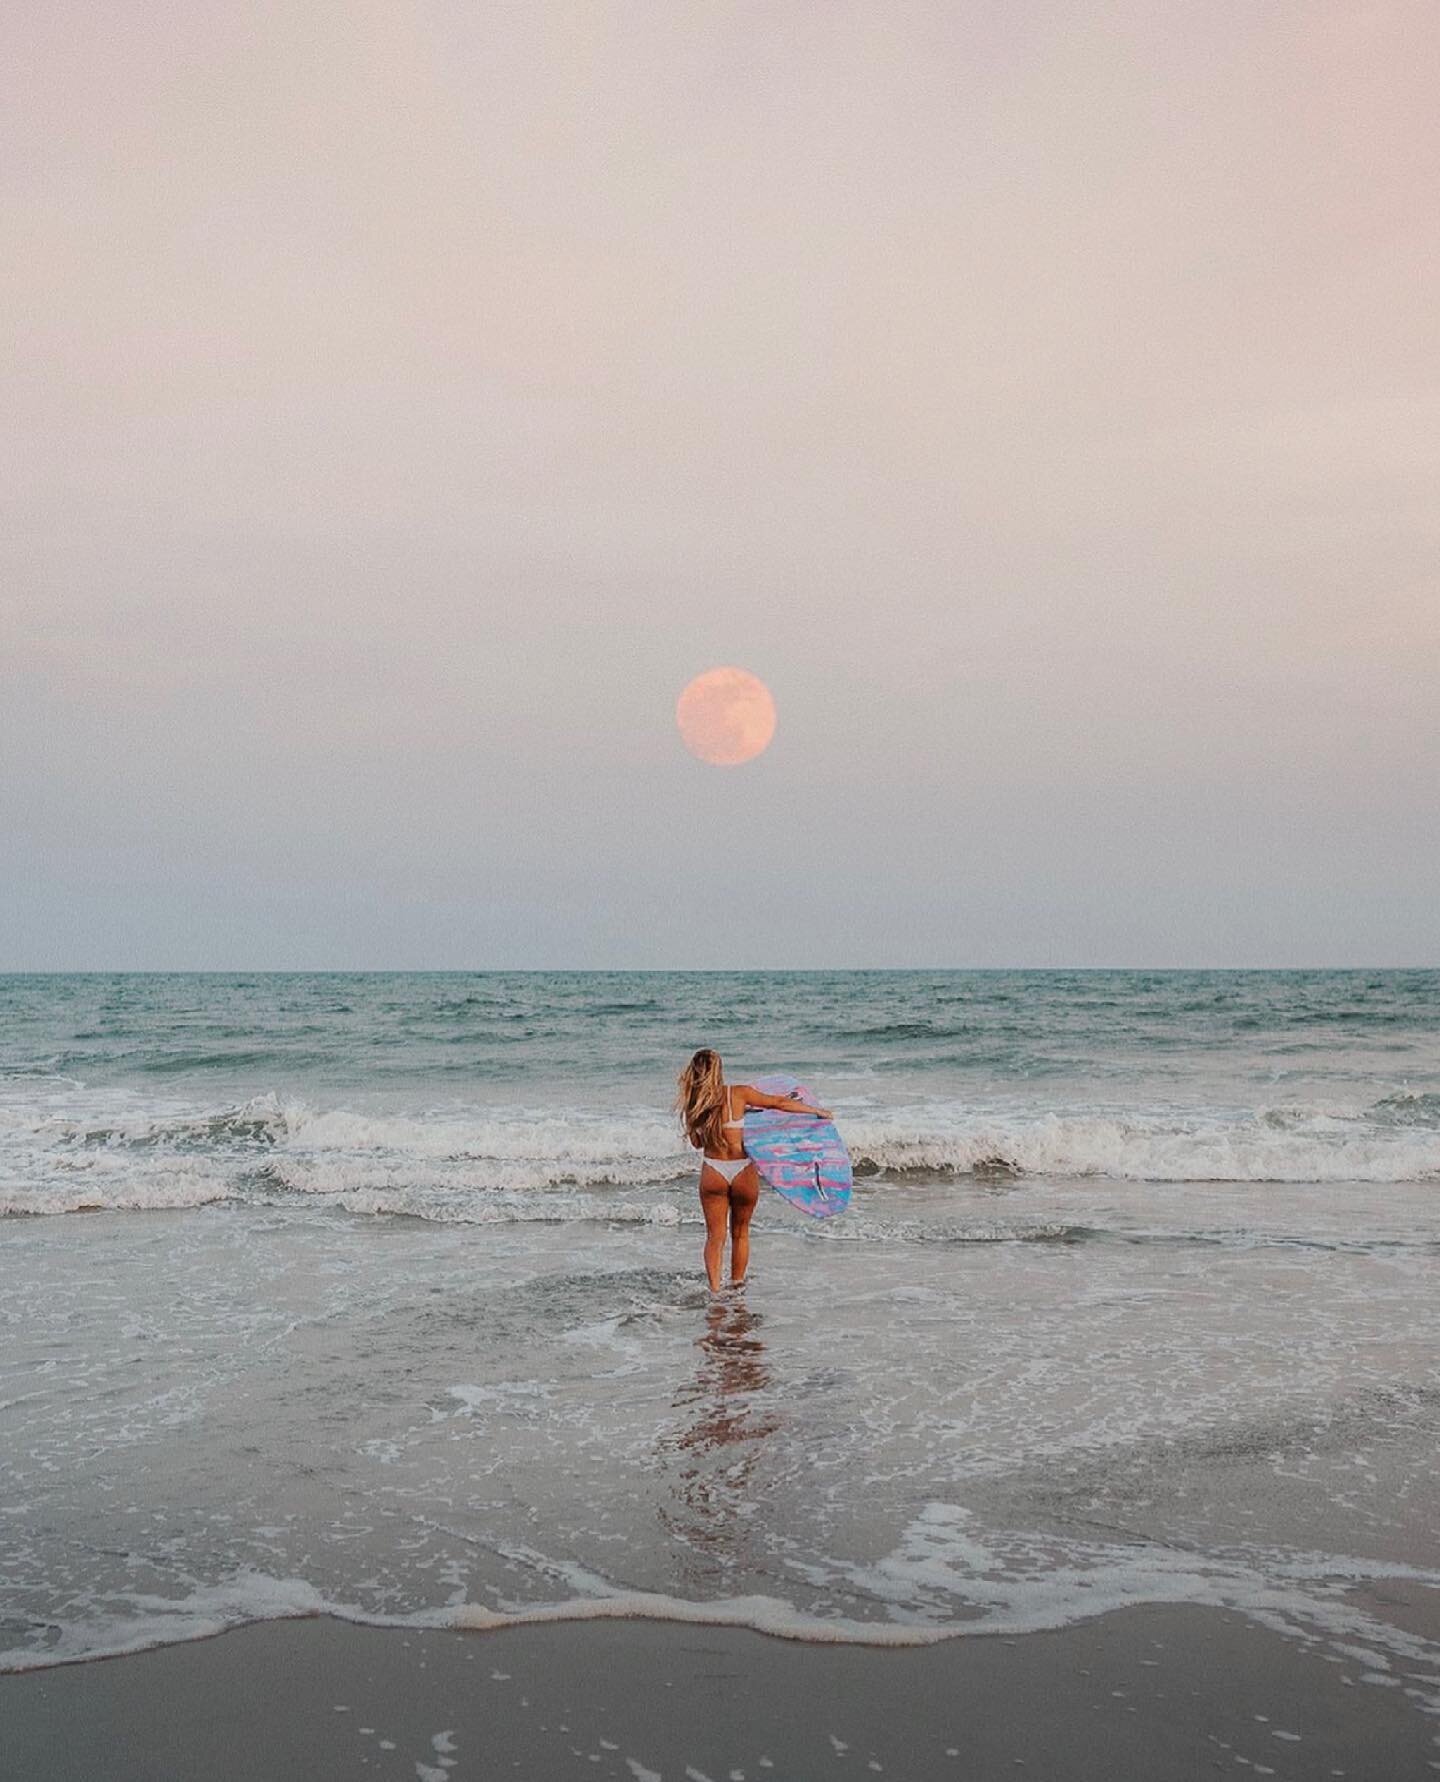 Super flower blood moon 🌝 photo by @will_is_dakine #surfbunnies #sweetmyrtle